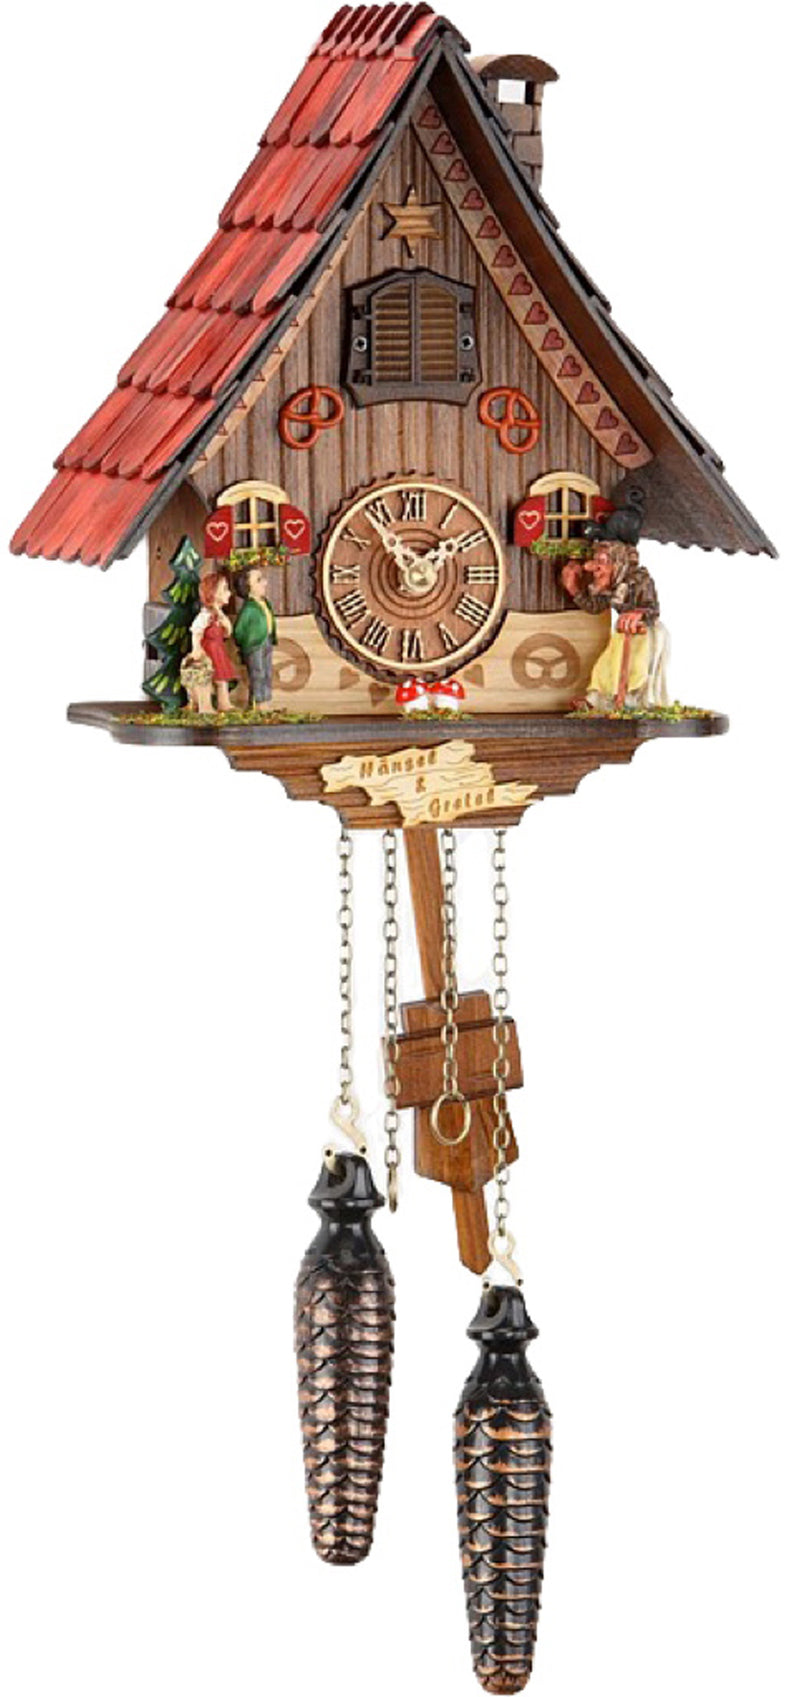 KU466QM - Quartz Musical Hansel & Gretel Themed Chalet Cuckoo Clock